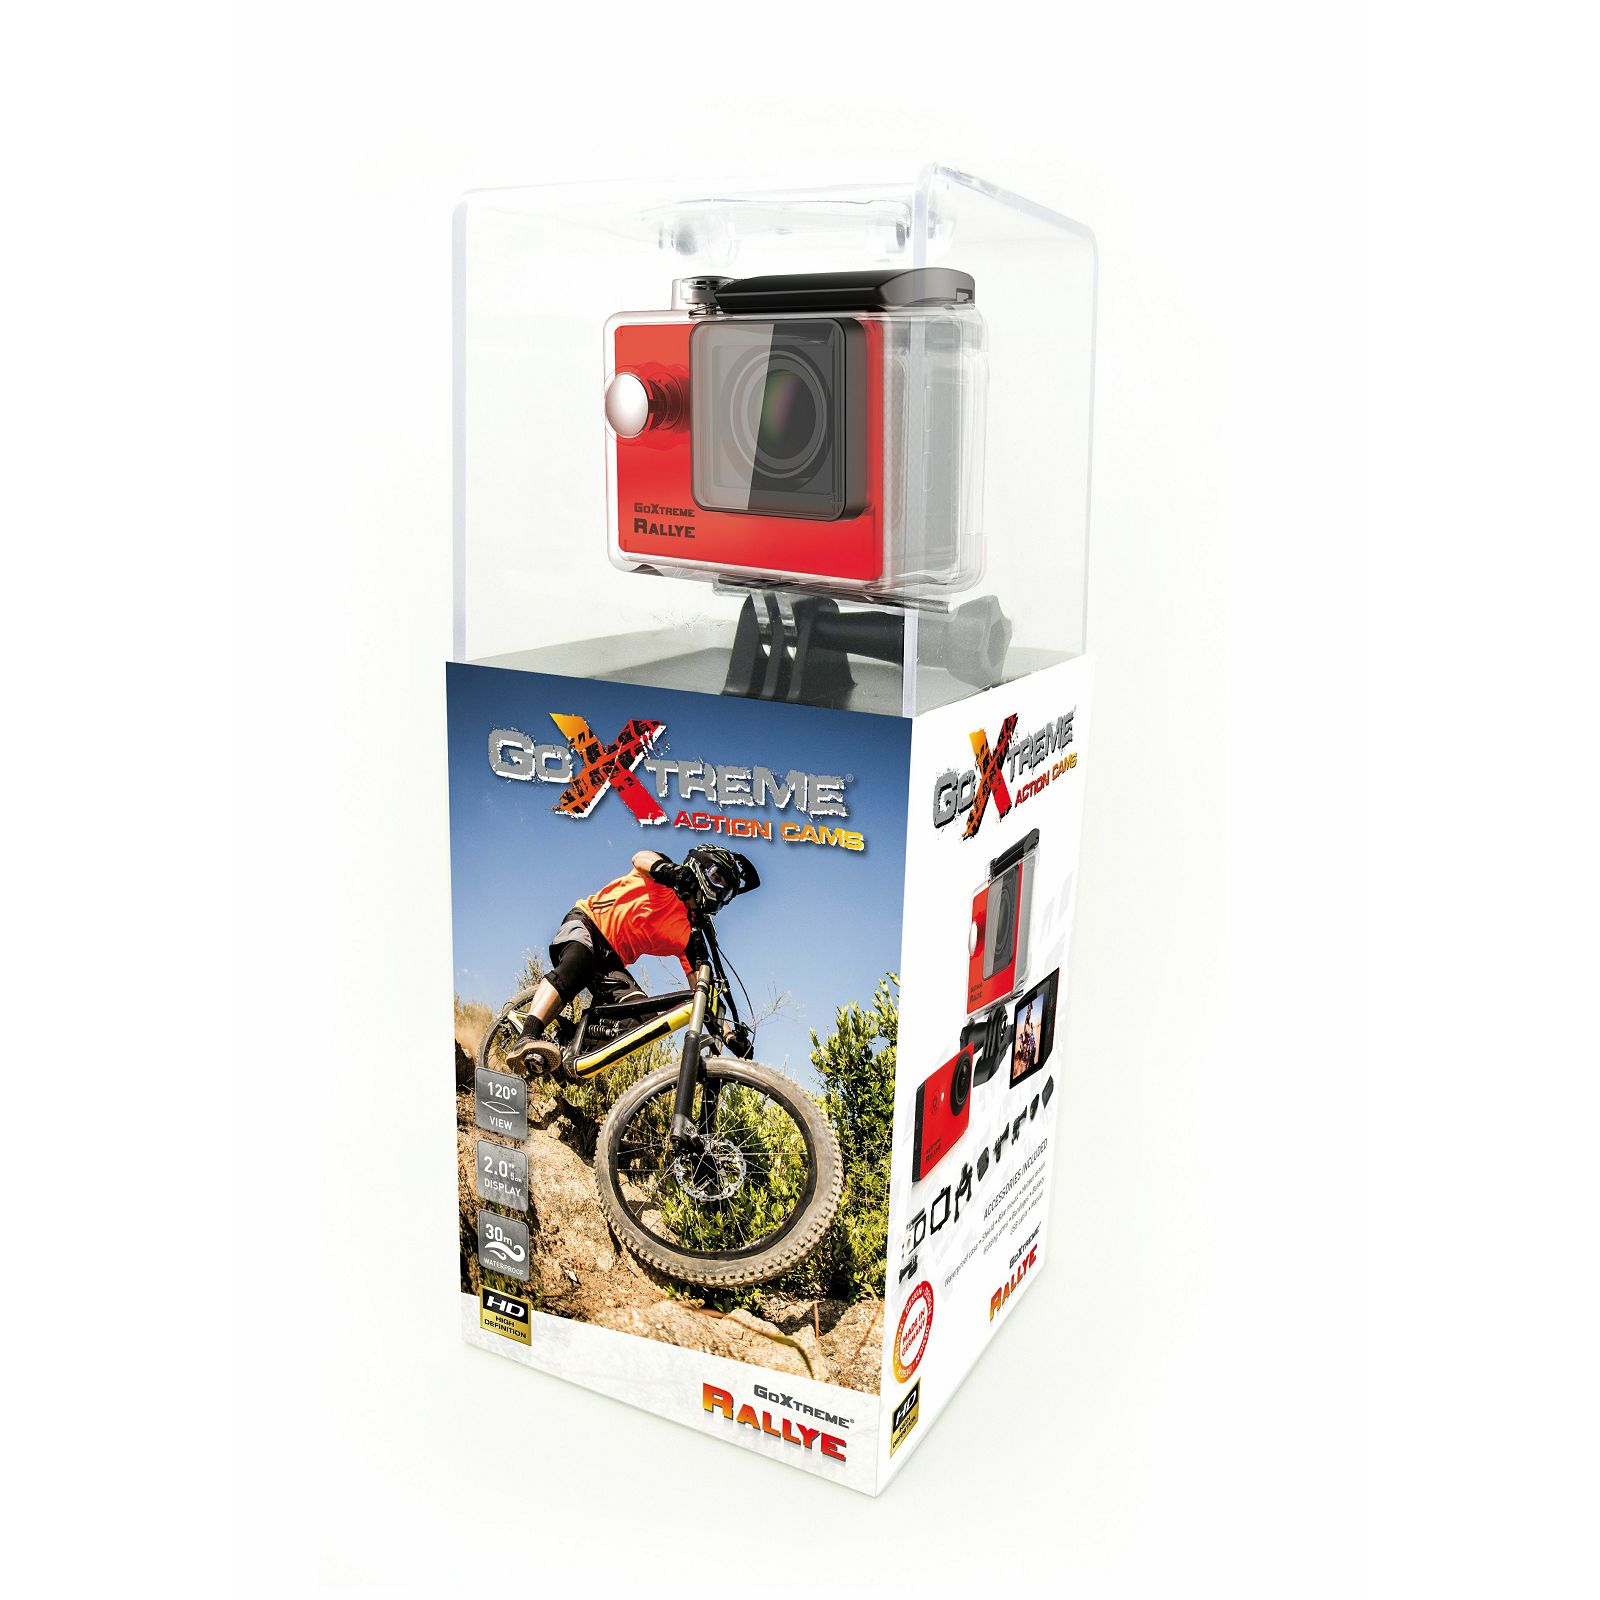 GoXtreme Rallye Red Action Camera Waterproof crvena sportska akcijska kamera vodootporna do 30m (20126)